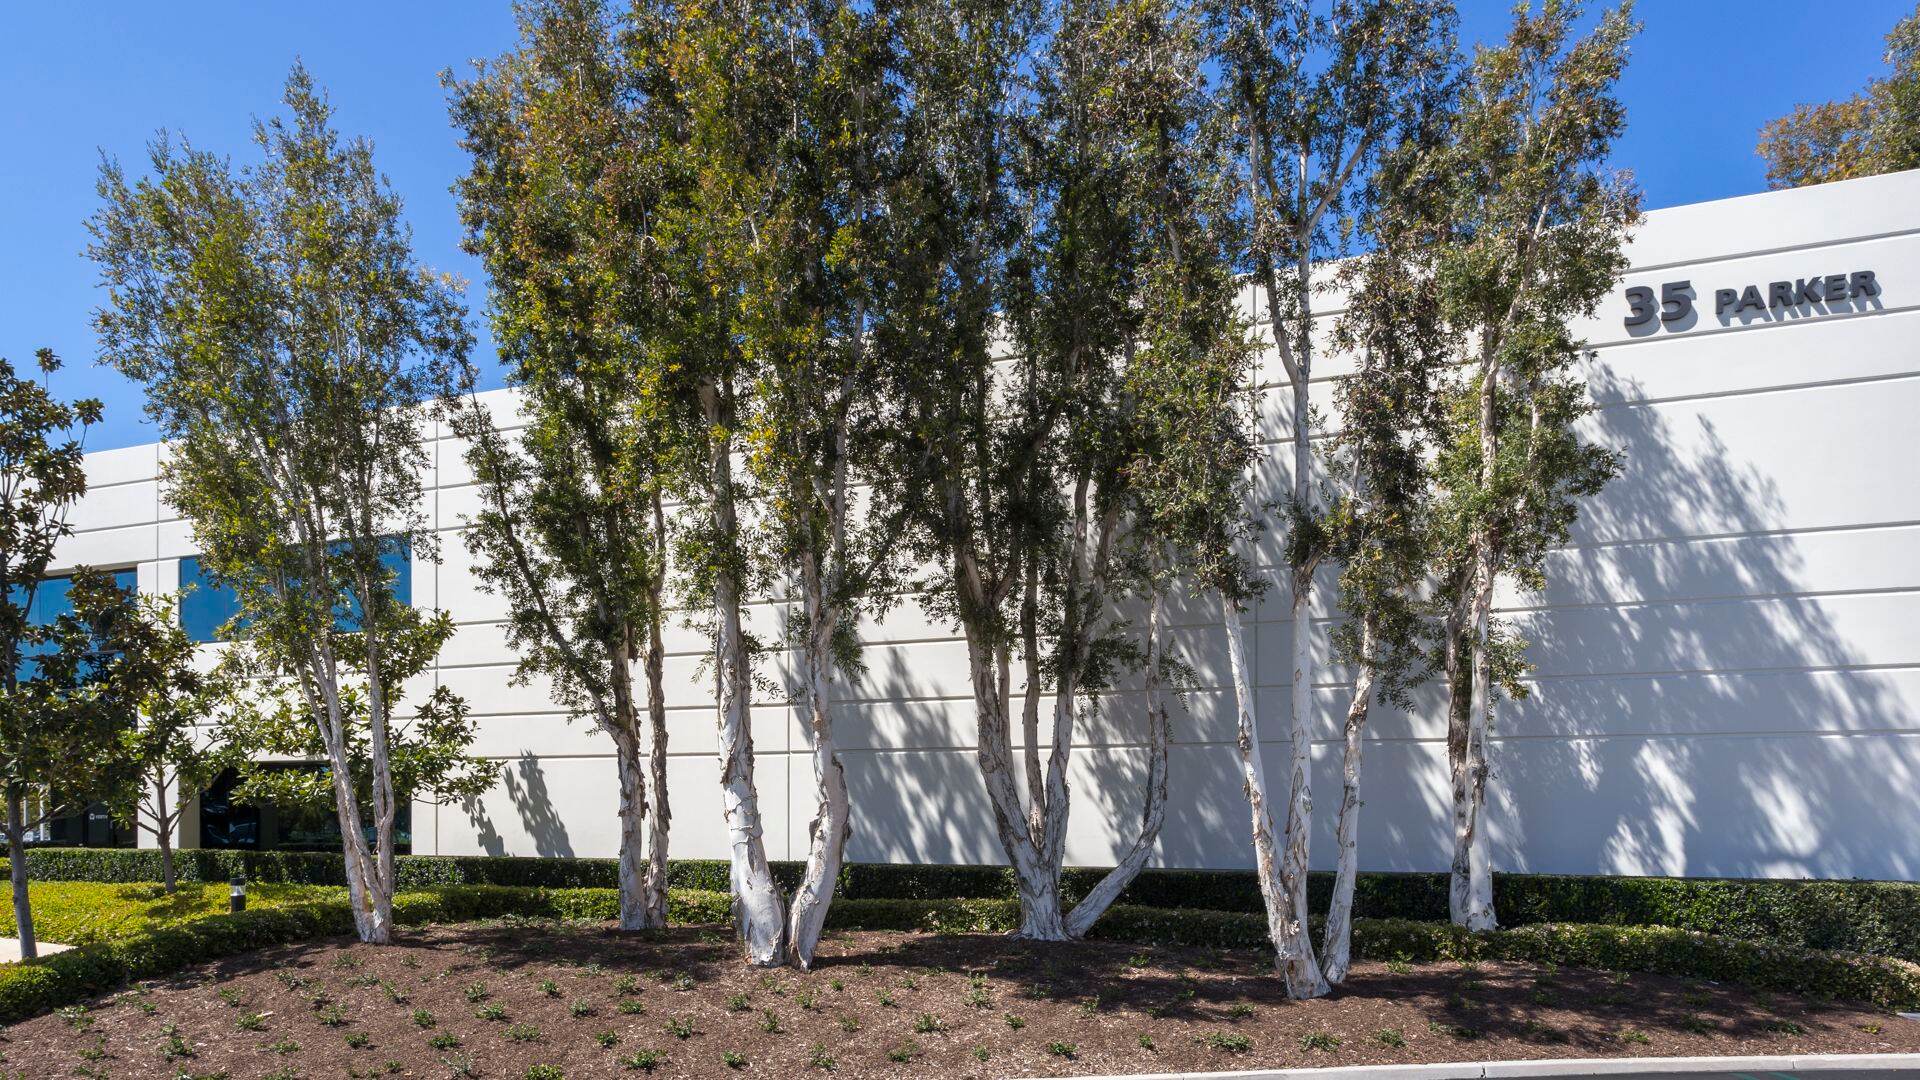 Exterior building photography for Parker Technology Center at 35 Parker, Irvine, CA